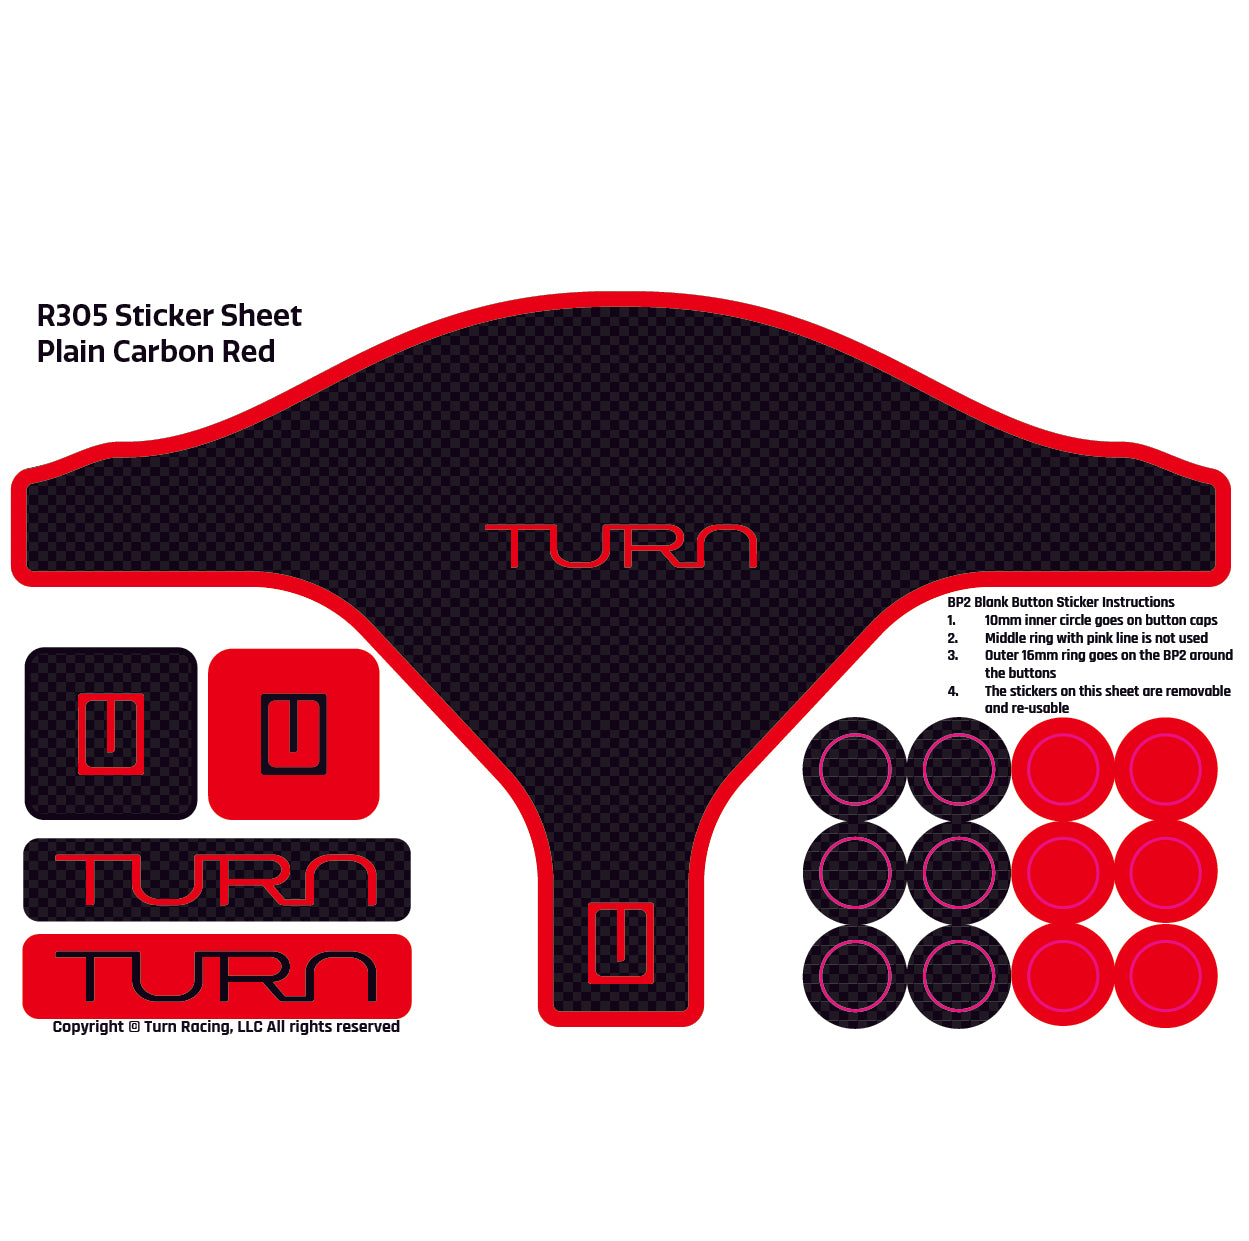 Turn R305 Sticker Sheet Gen2 - Plain Carbon Red